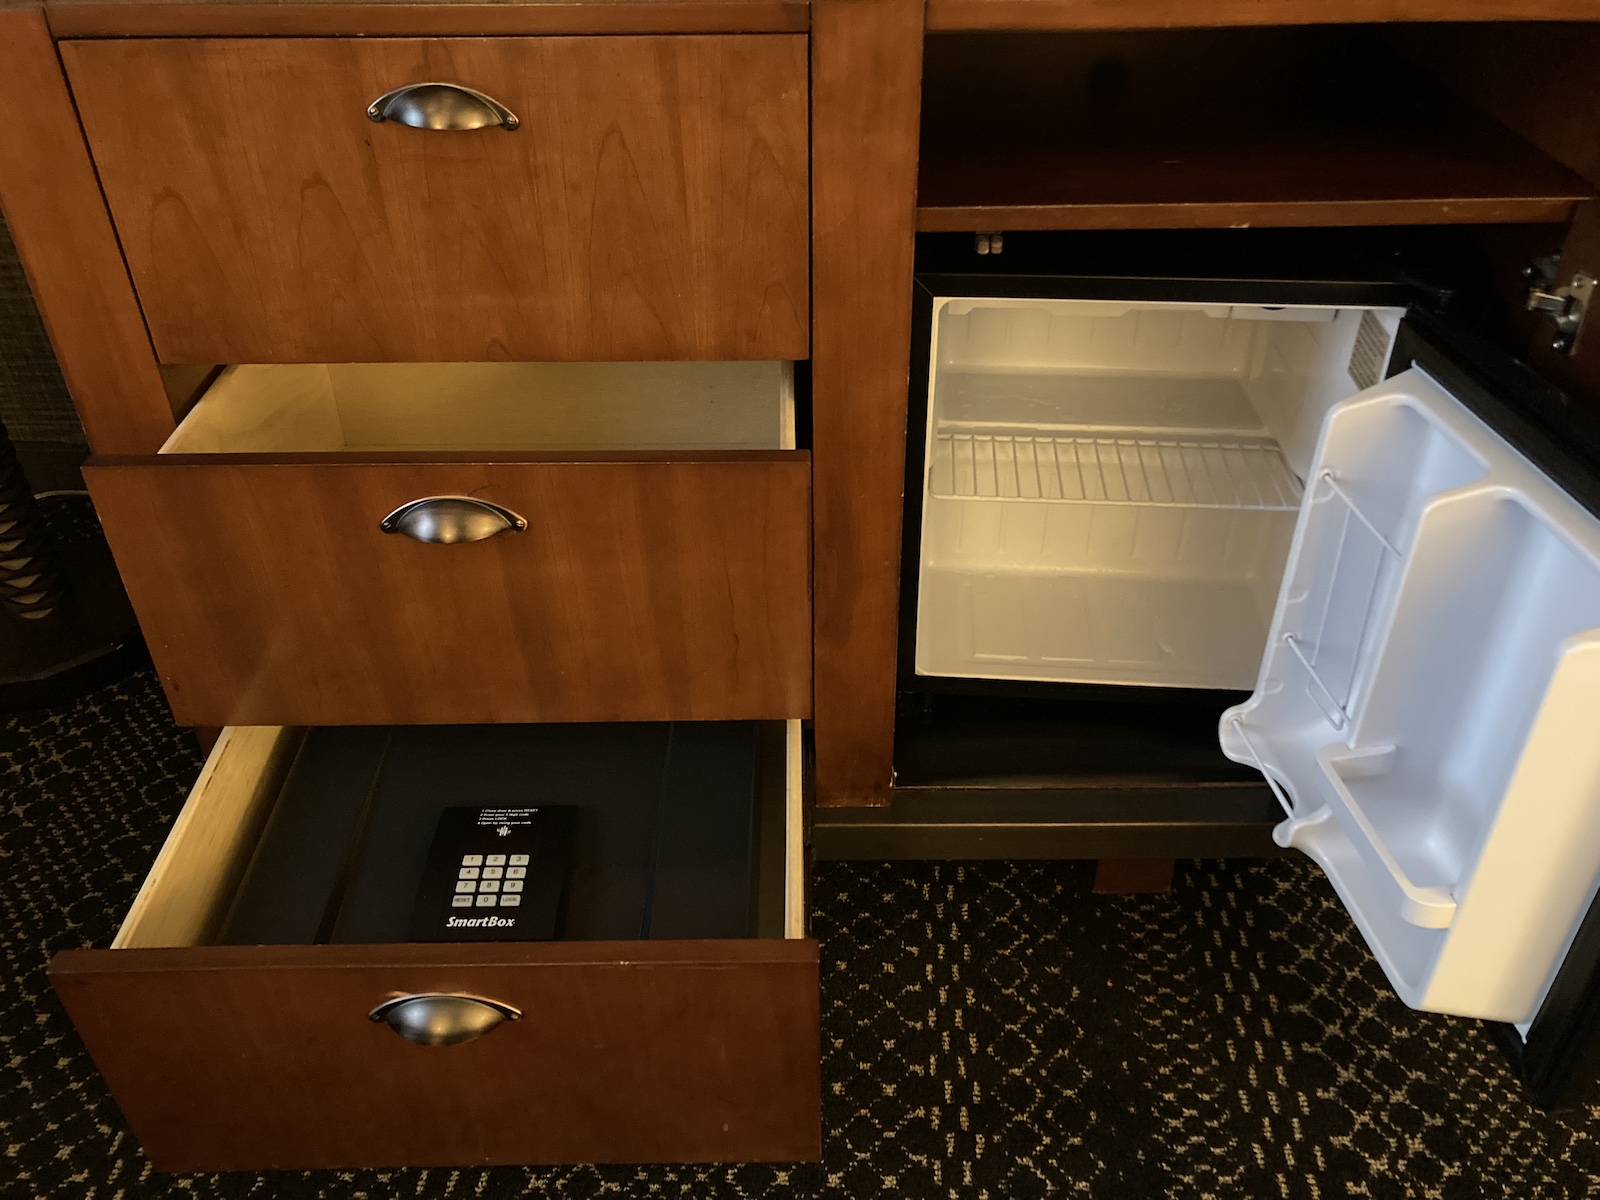 Photo shows drawers, safe, and mini fridge inside the dresser